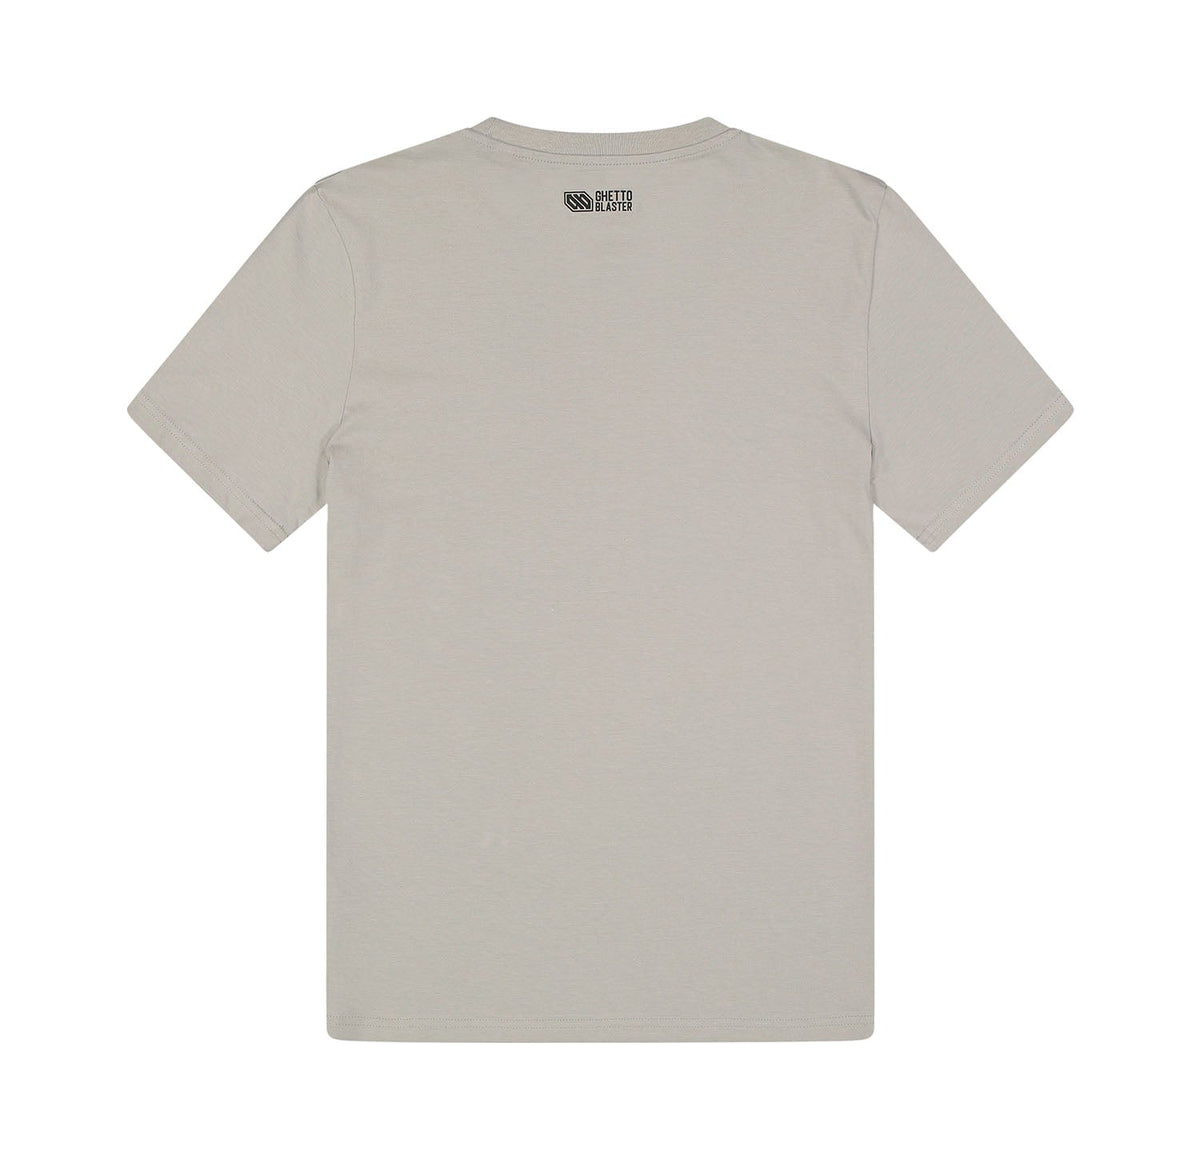 T-Shirt 3 Dollars Grey - ghettoblasterwear